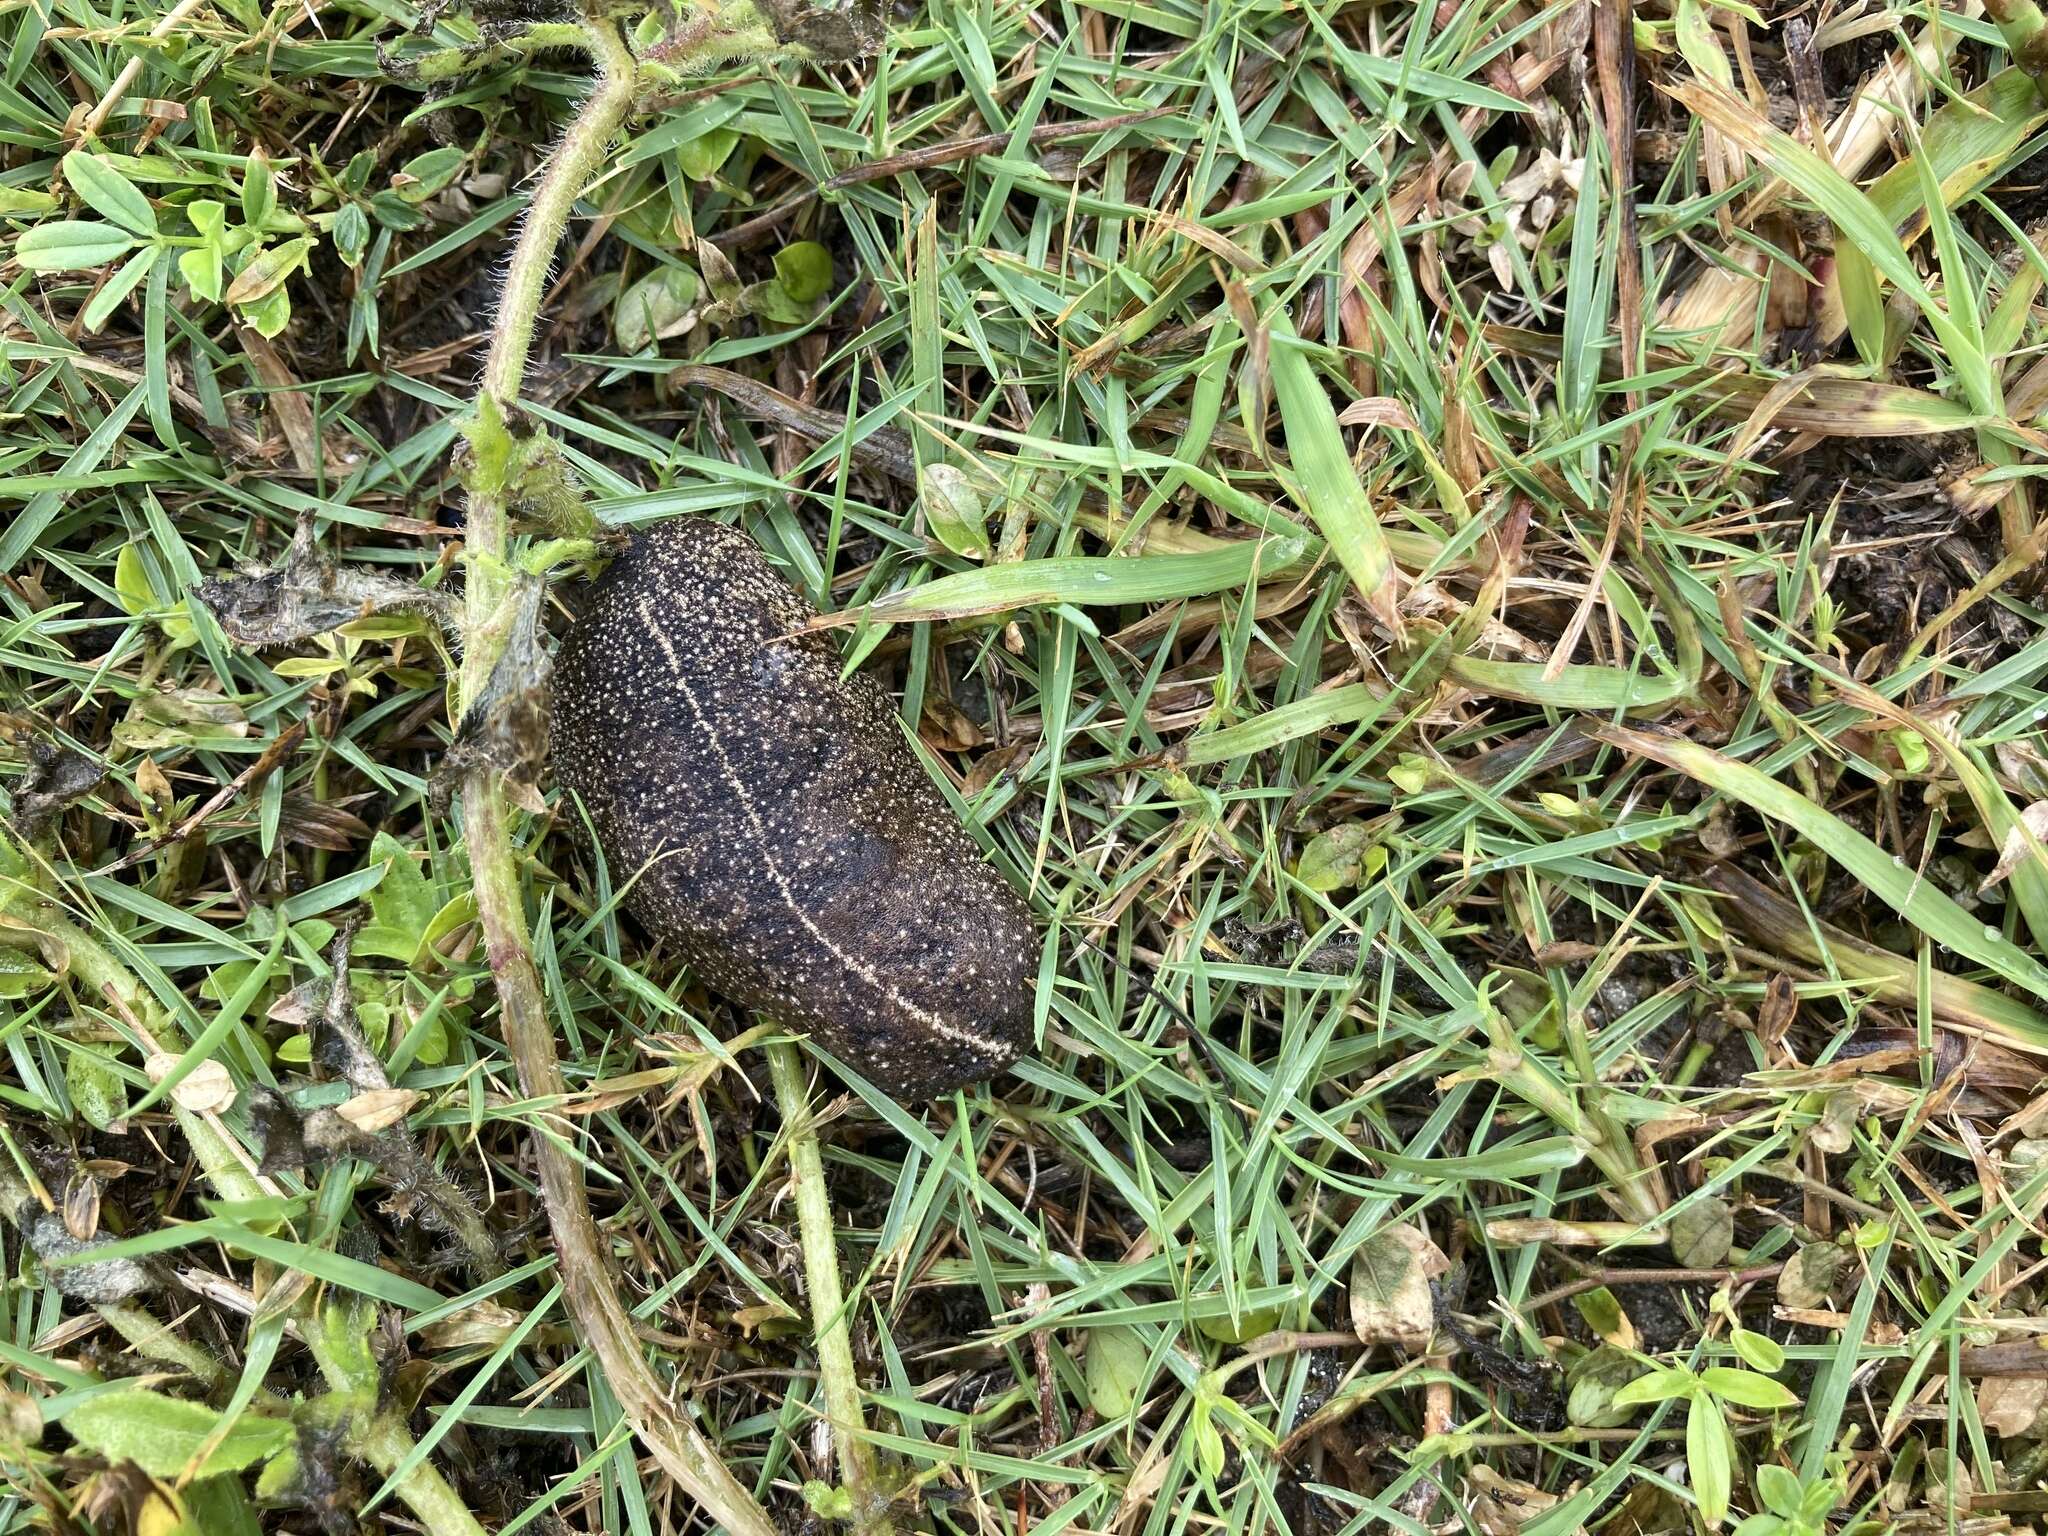 Image of Cuban slug